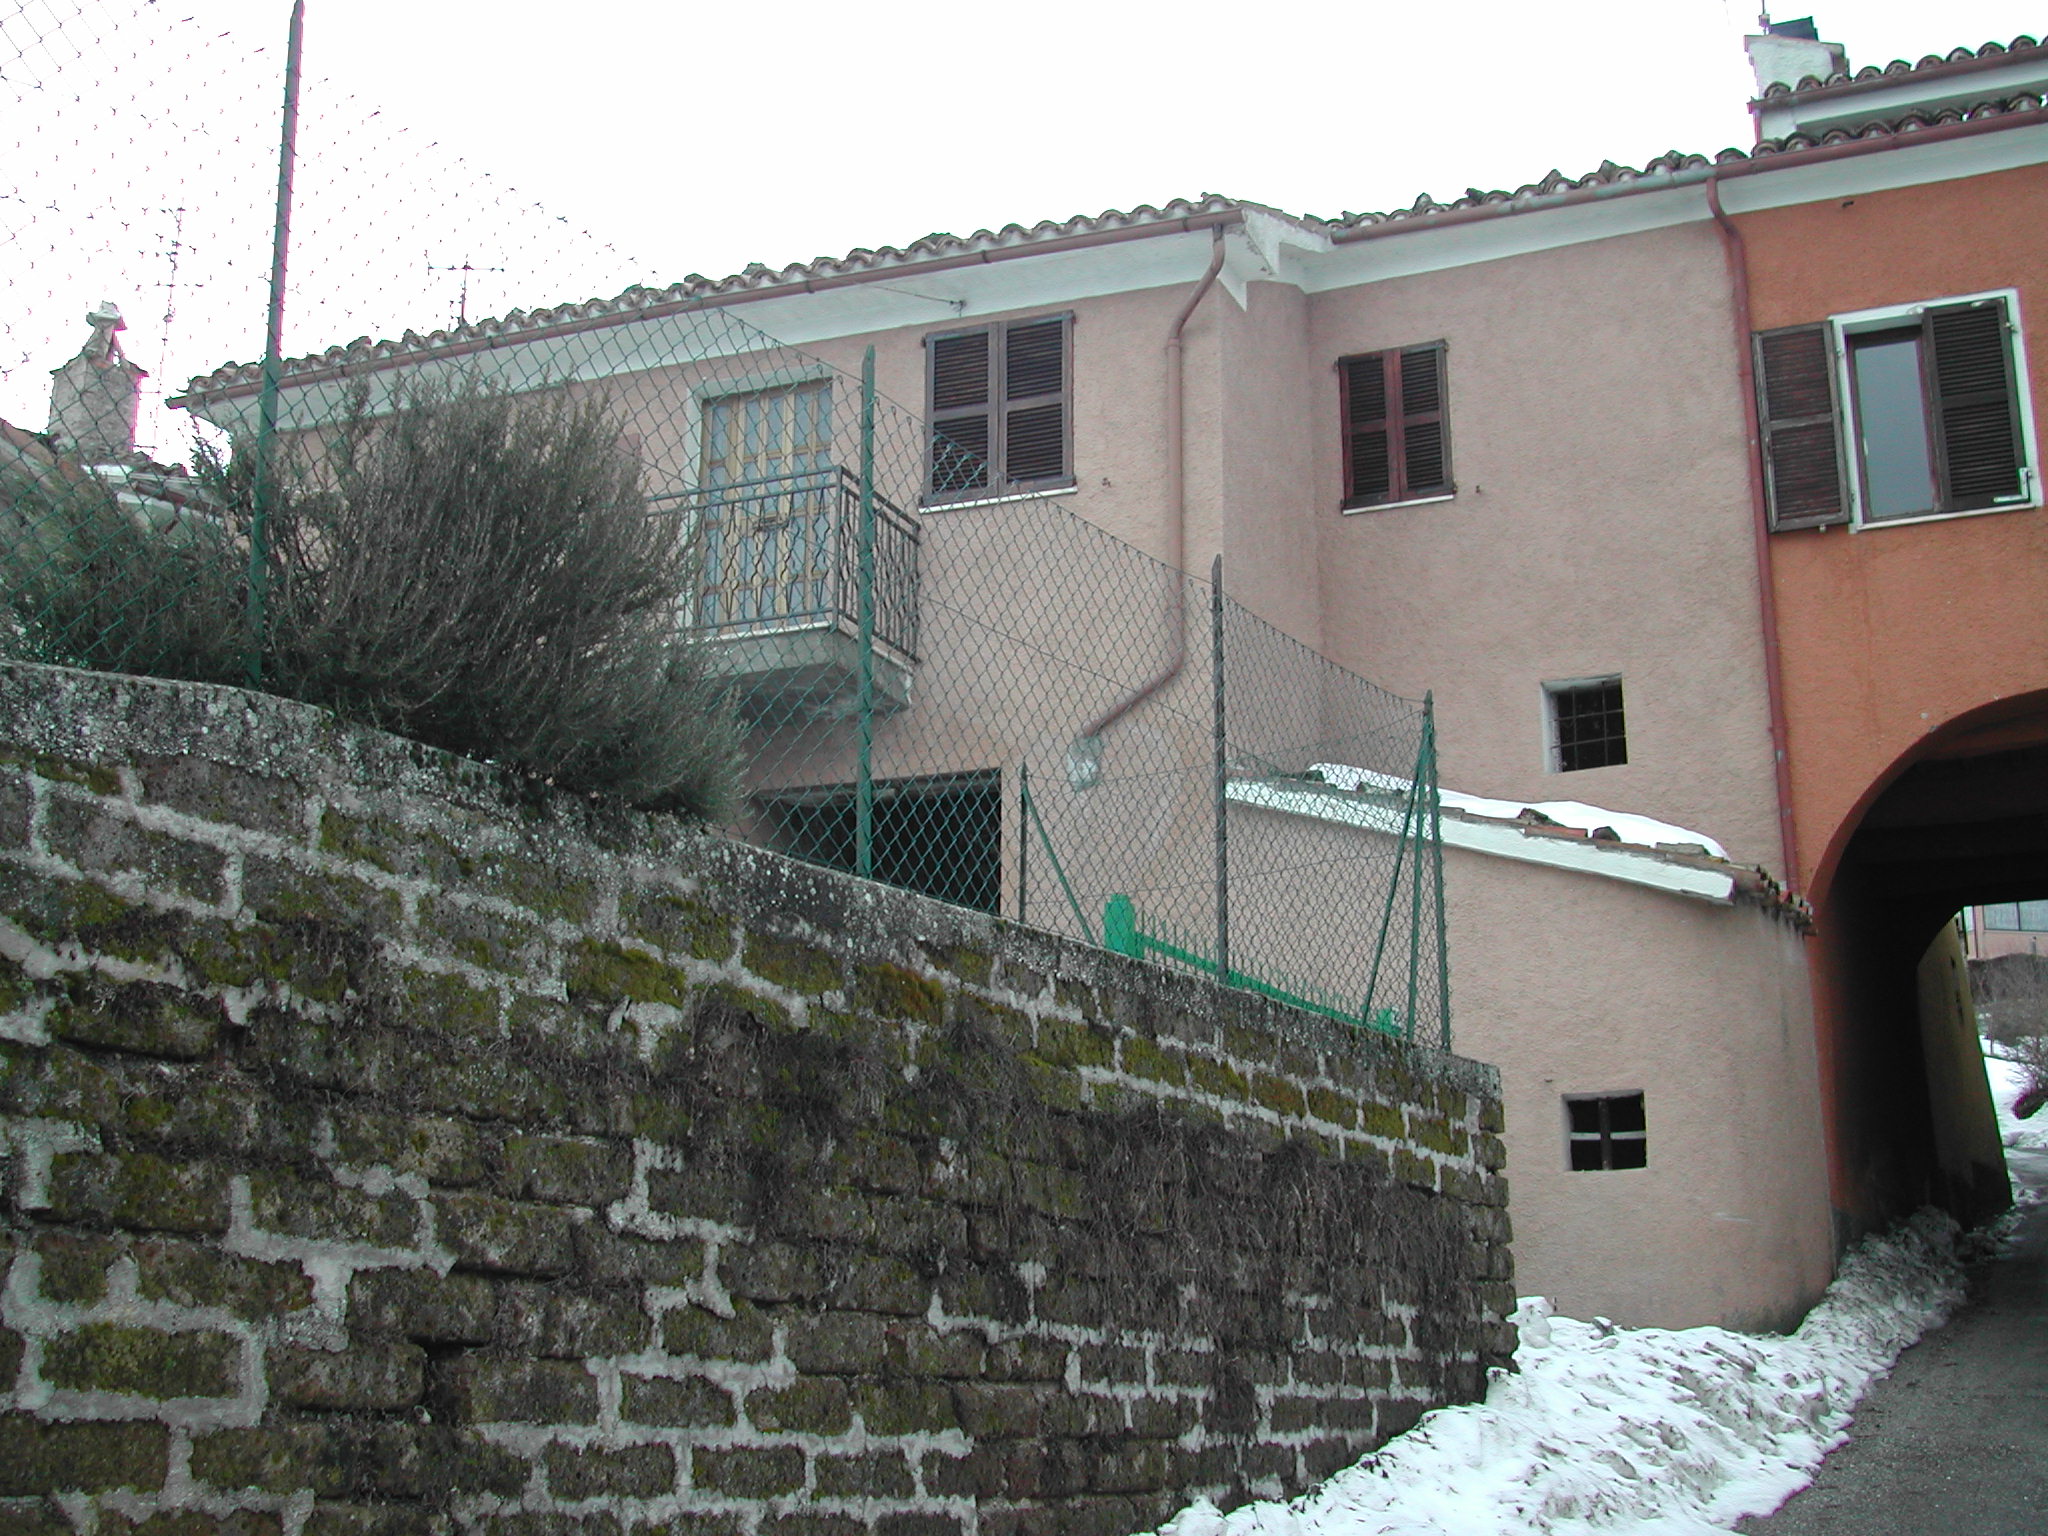 Casa medievale (casa medievale) - Fiastra (MC) 